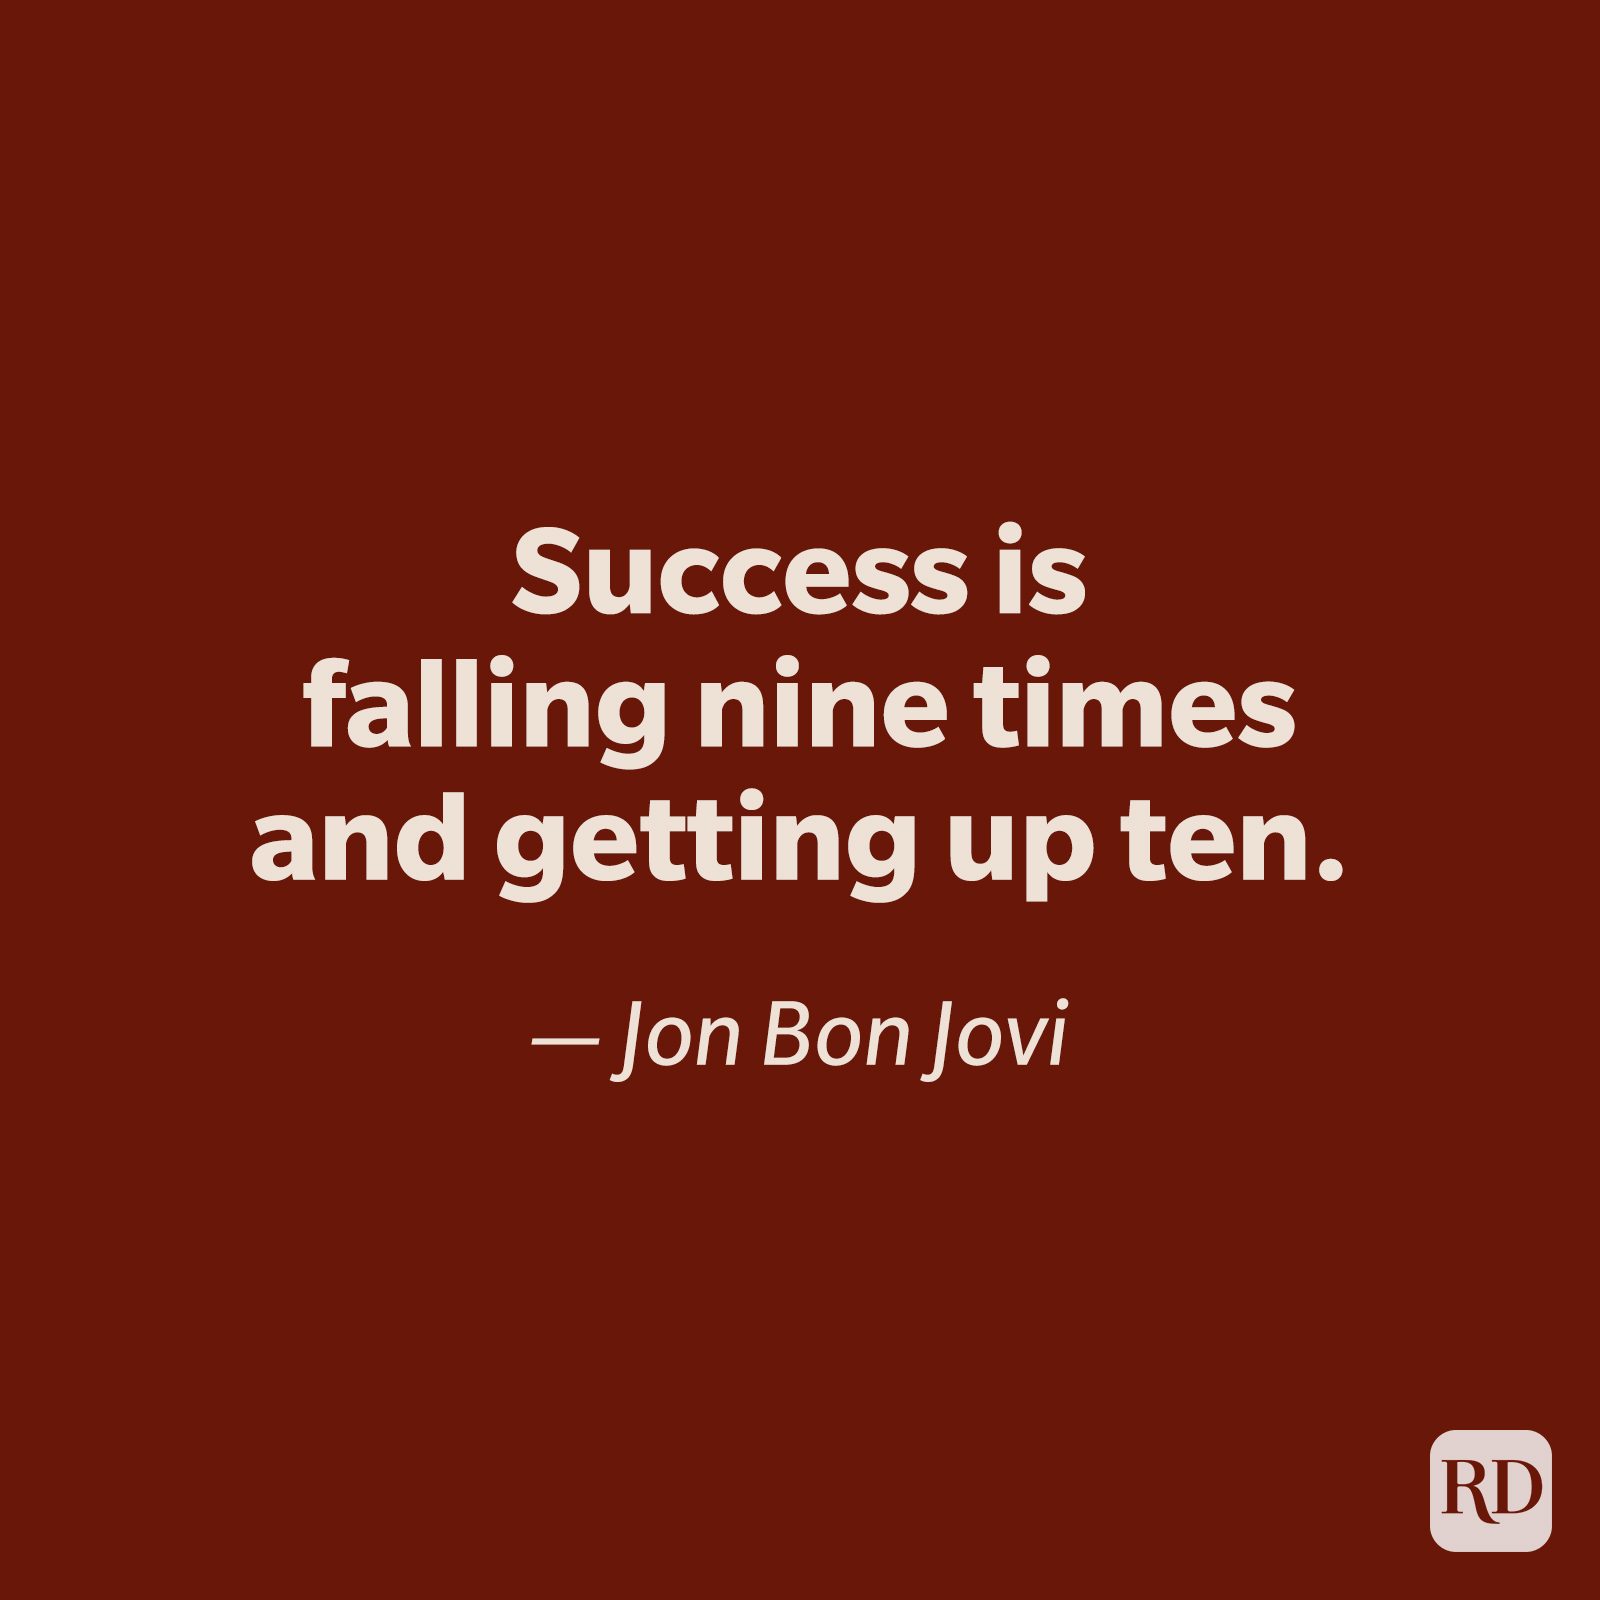 Jon Bon Jovi quote 